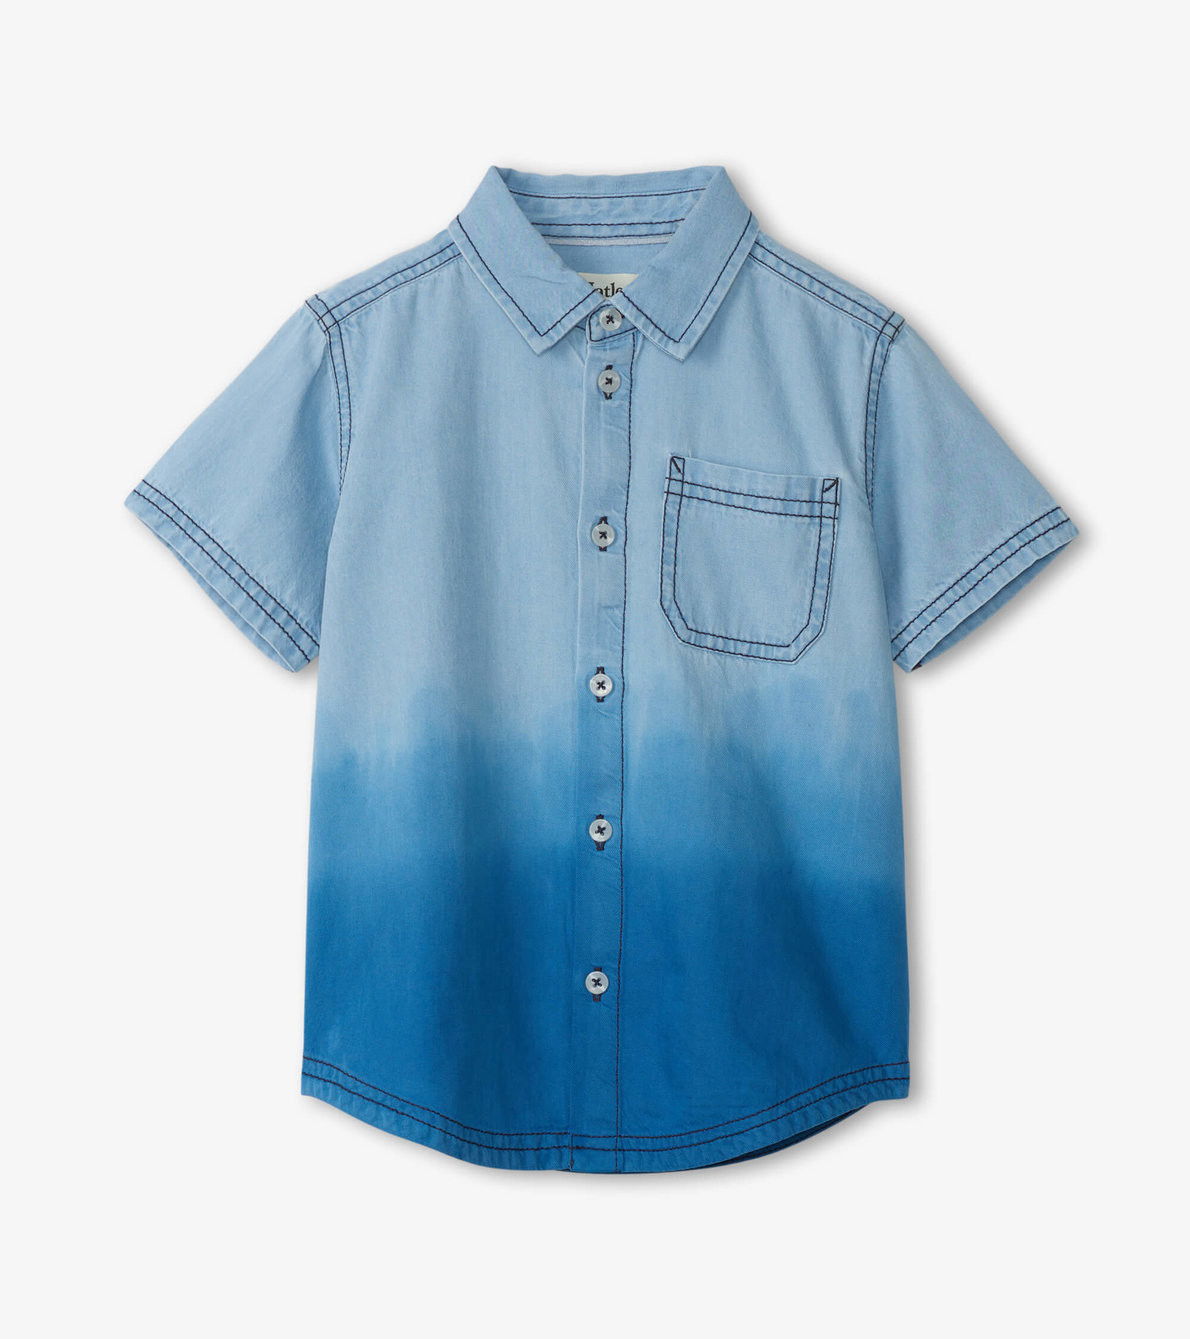 View larger image of Denim Dip Dye Short Sleeve Button Down Shirt